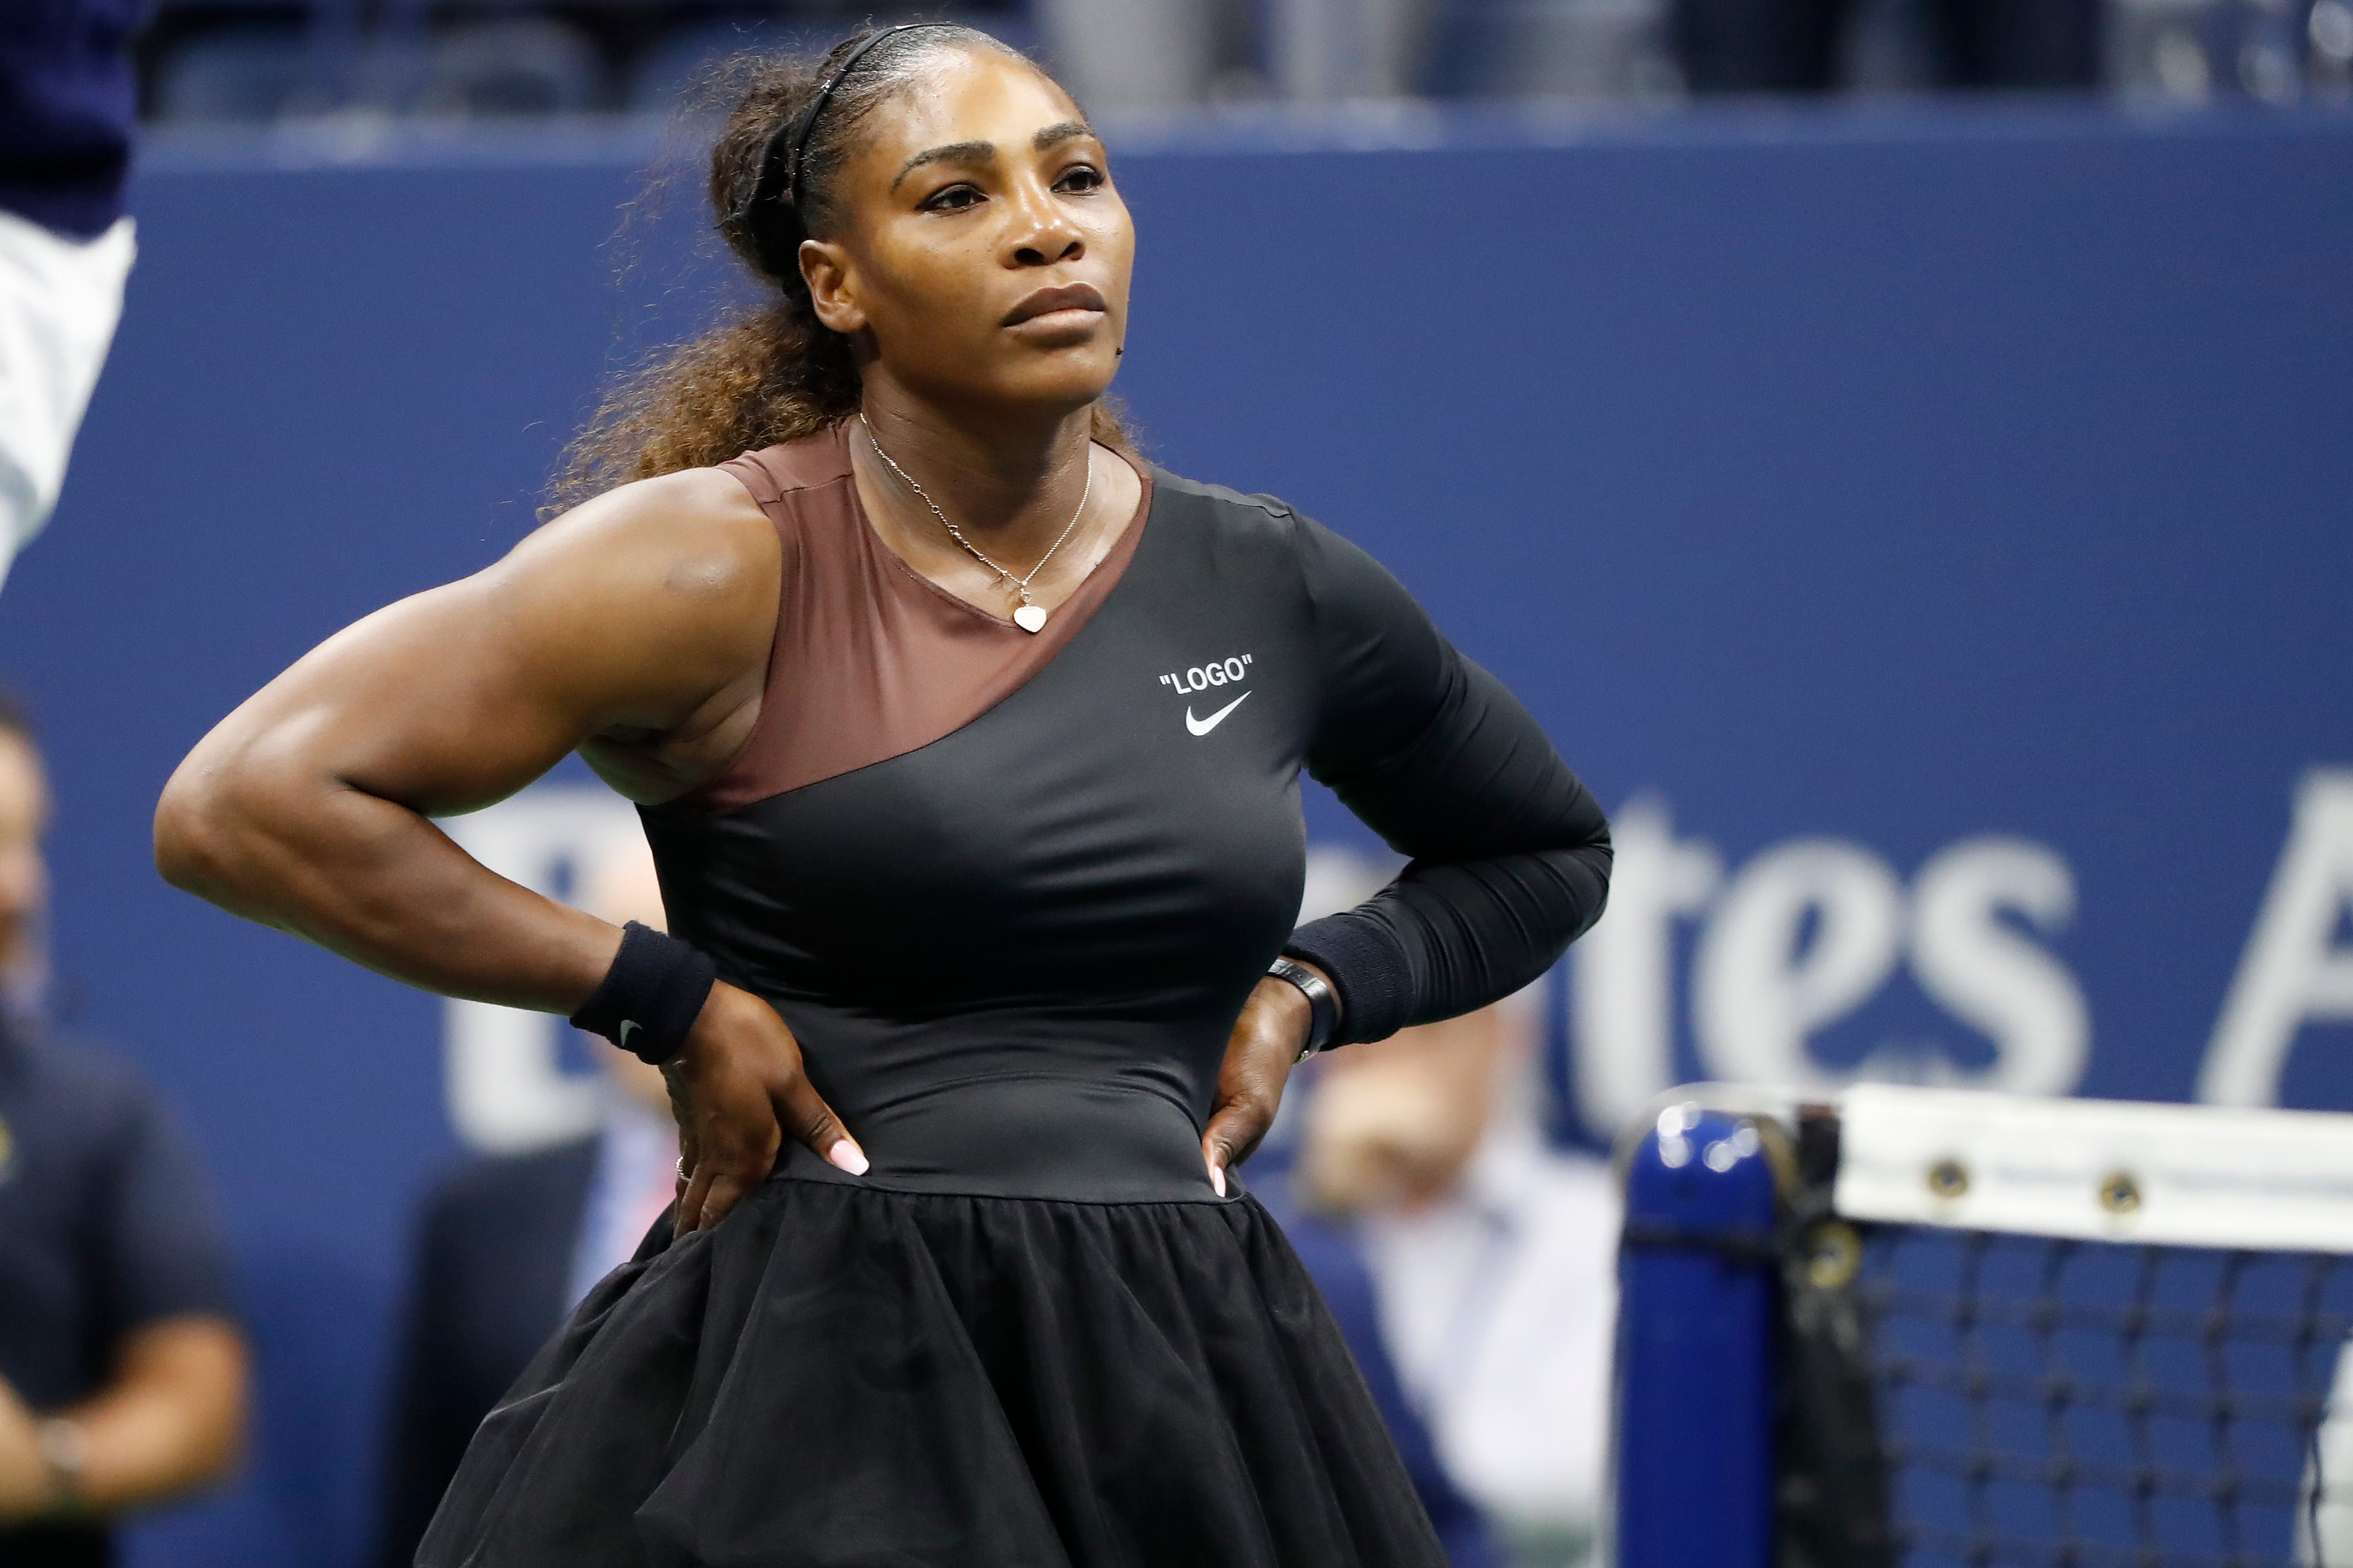 Serena Williams: Cartoon of tennis star non-racist, per media watchdog